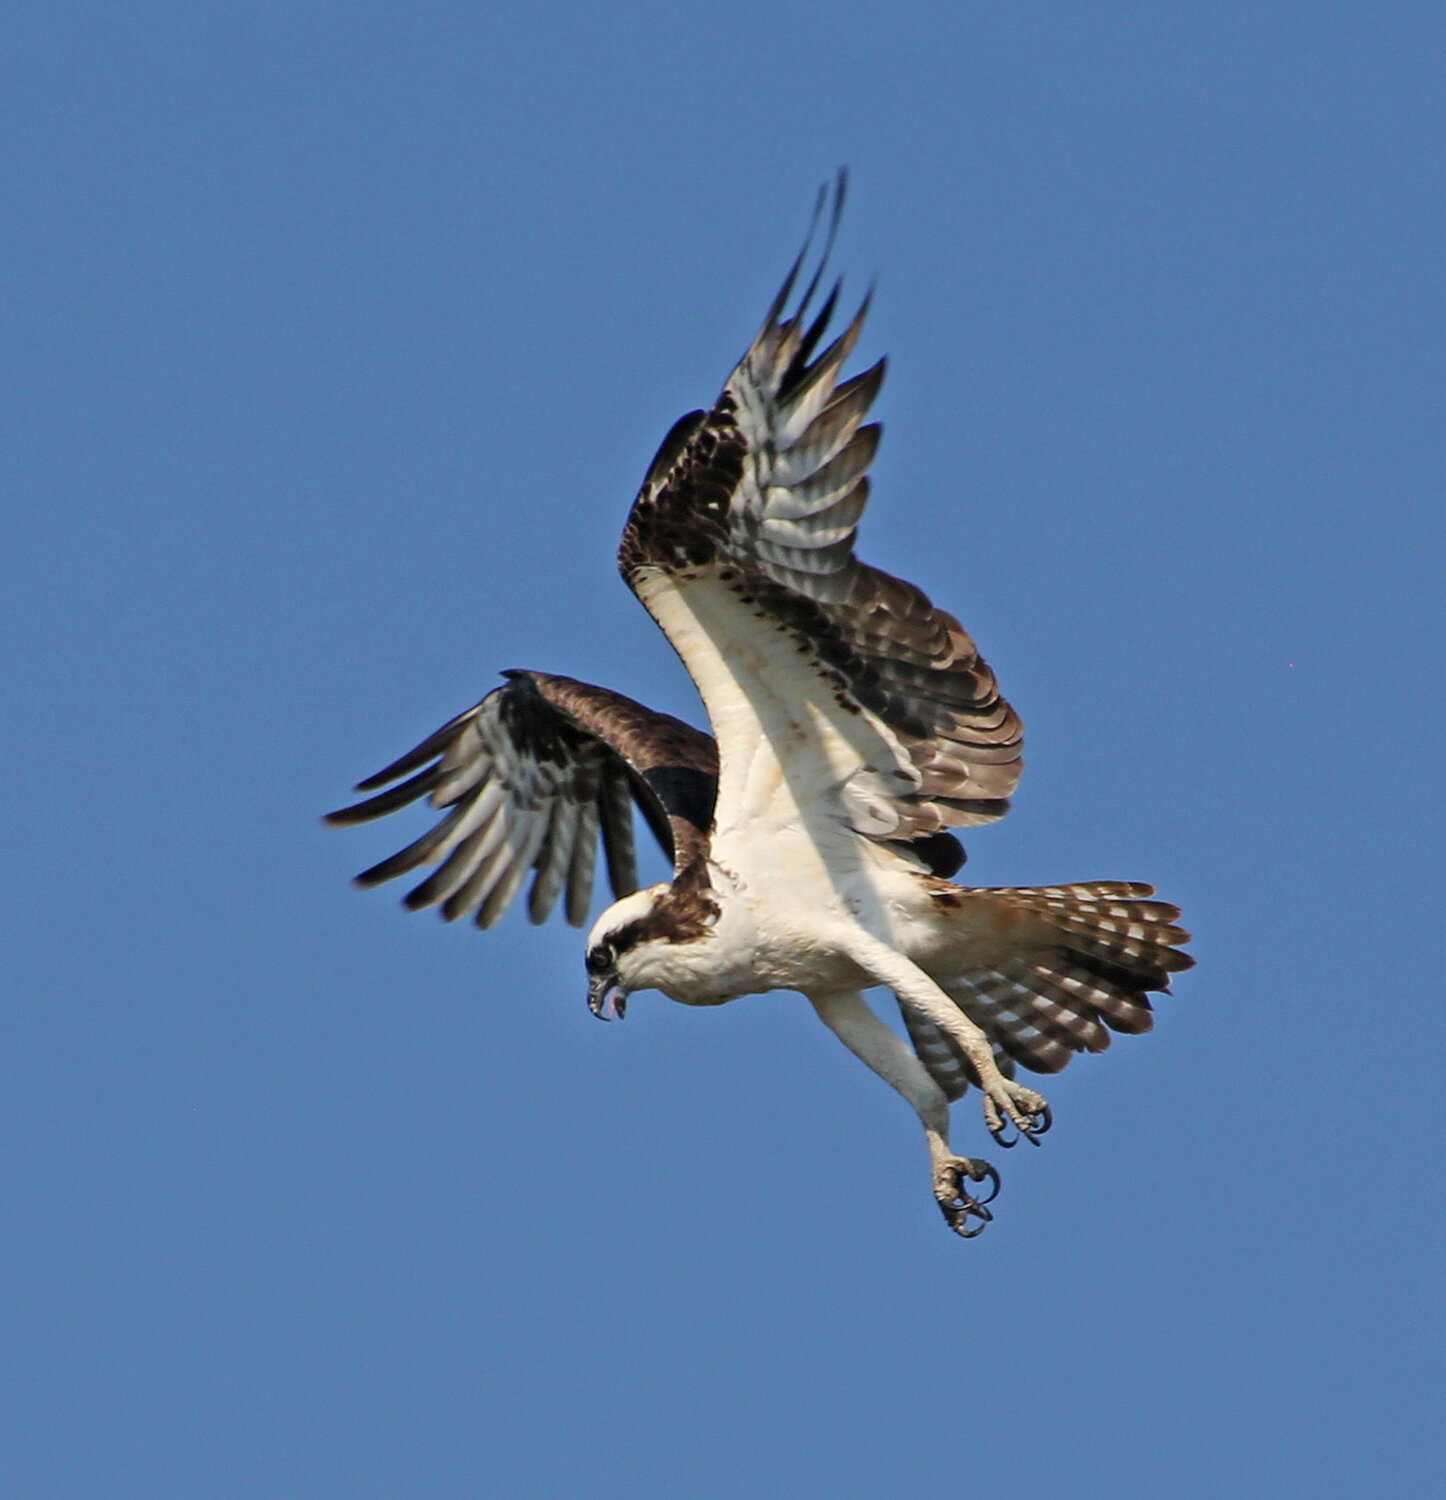 An osprey begins its attack plunge.